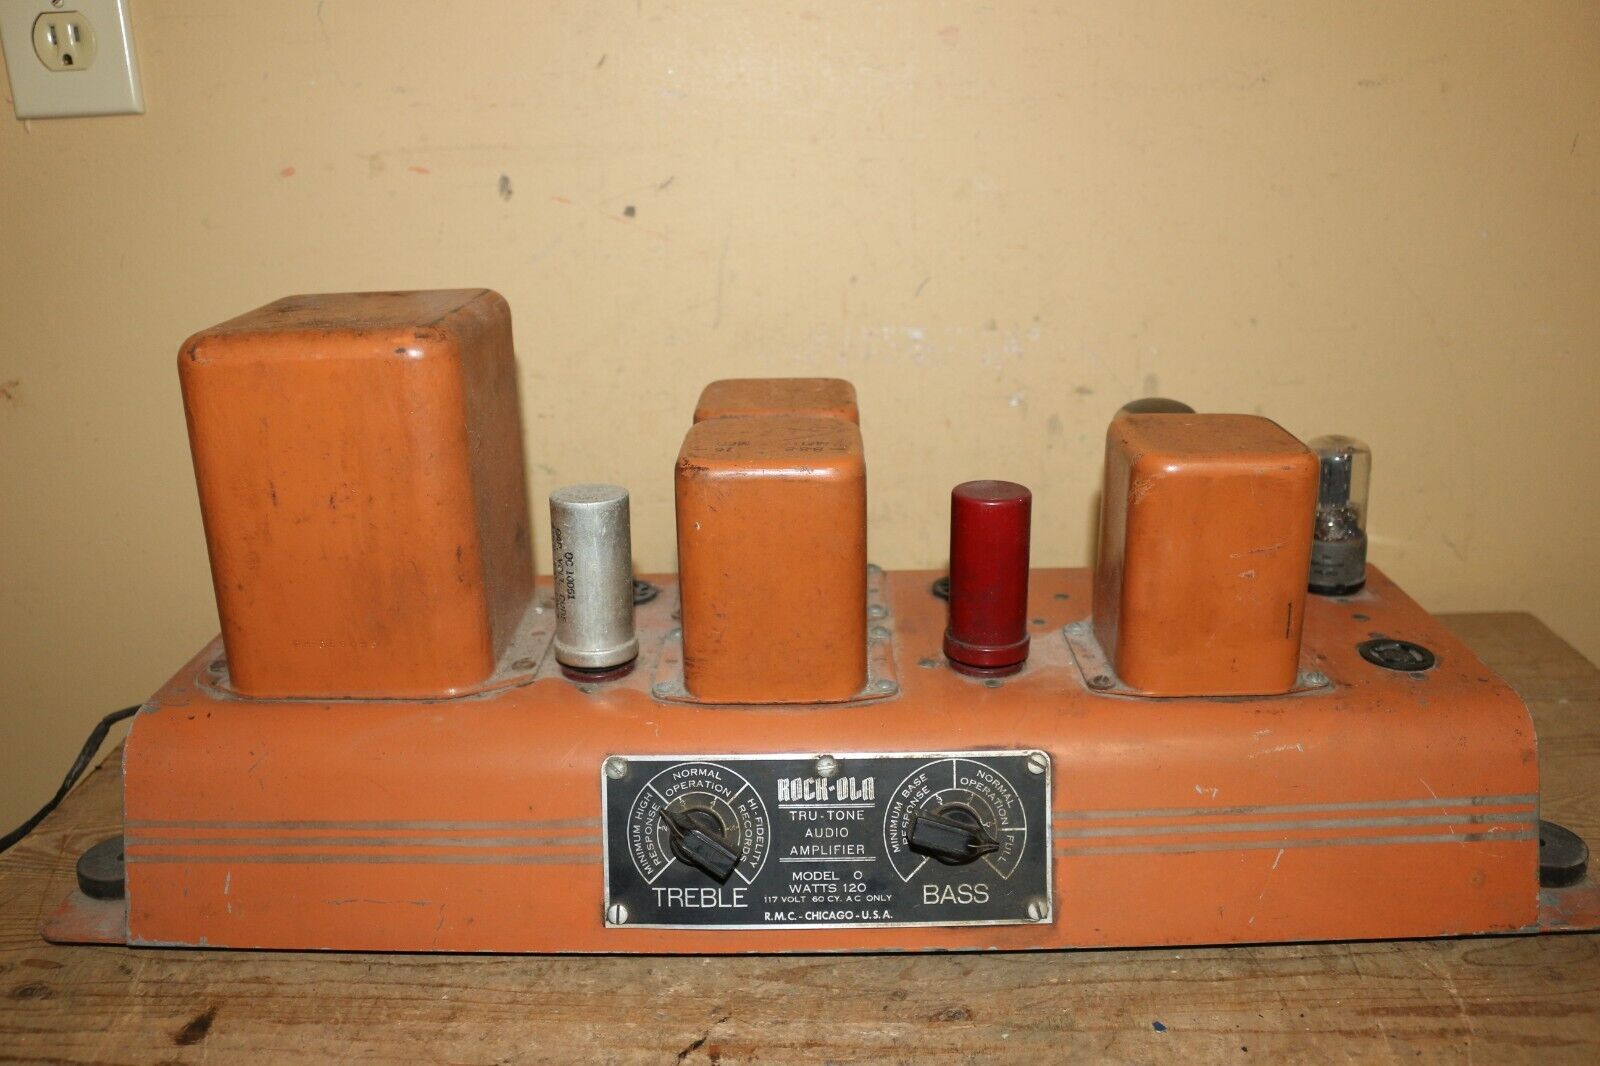 Vintage 1940's Rock-Ola Rockola Jukebox Amp Tru-Tone Audio Amplifier